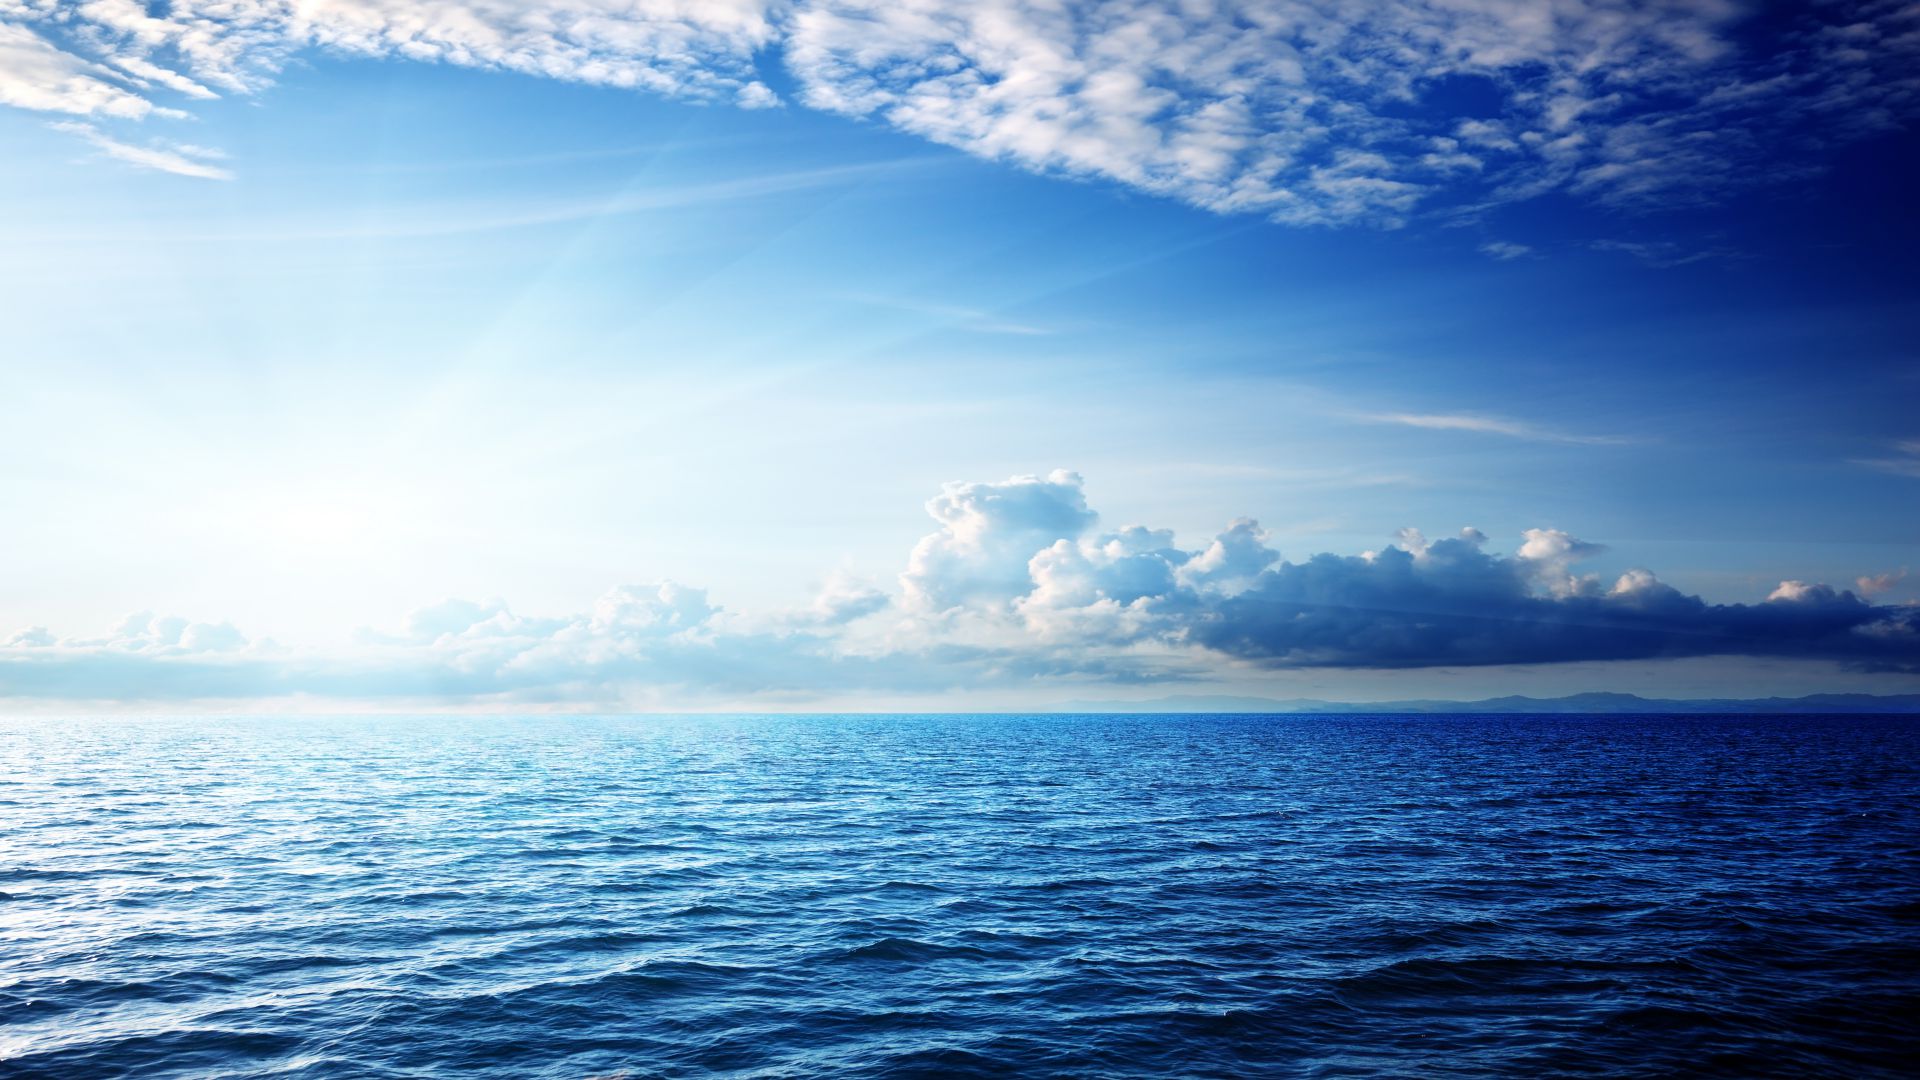 Море, 5k, 4k, океан, небо, облака, Sea, 5k, 4k wallpaper, ocean, sky, clouds (horizontal)